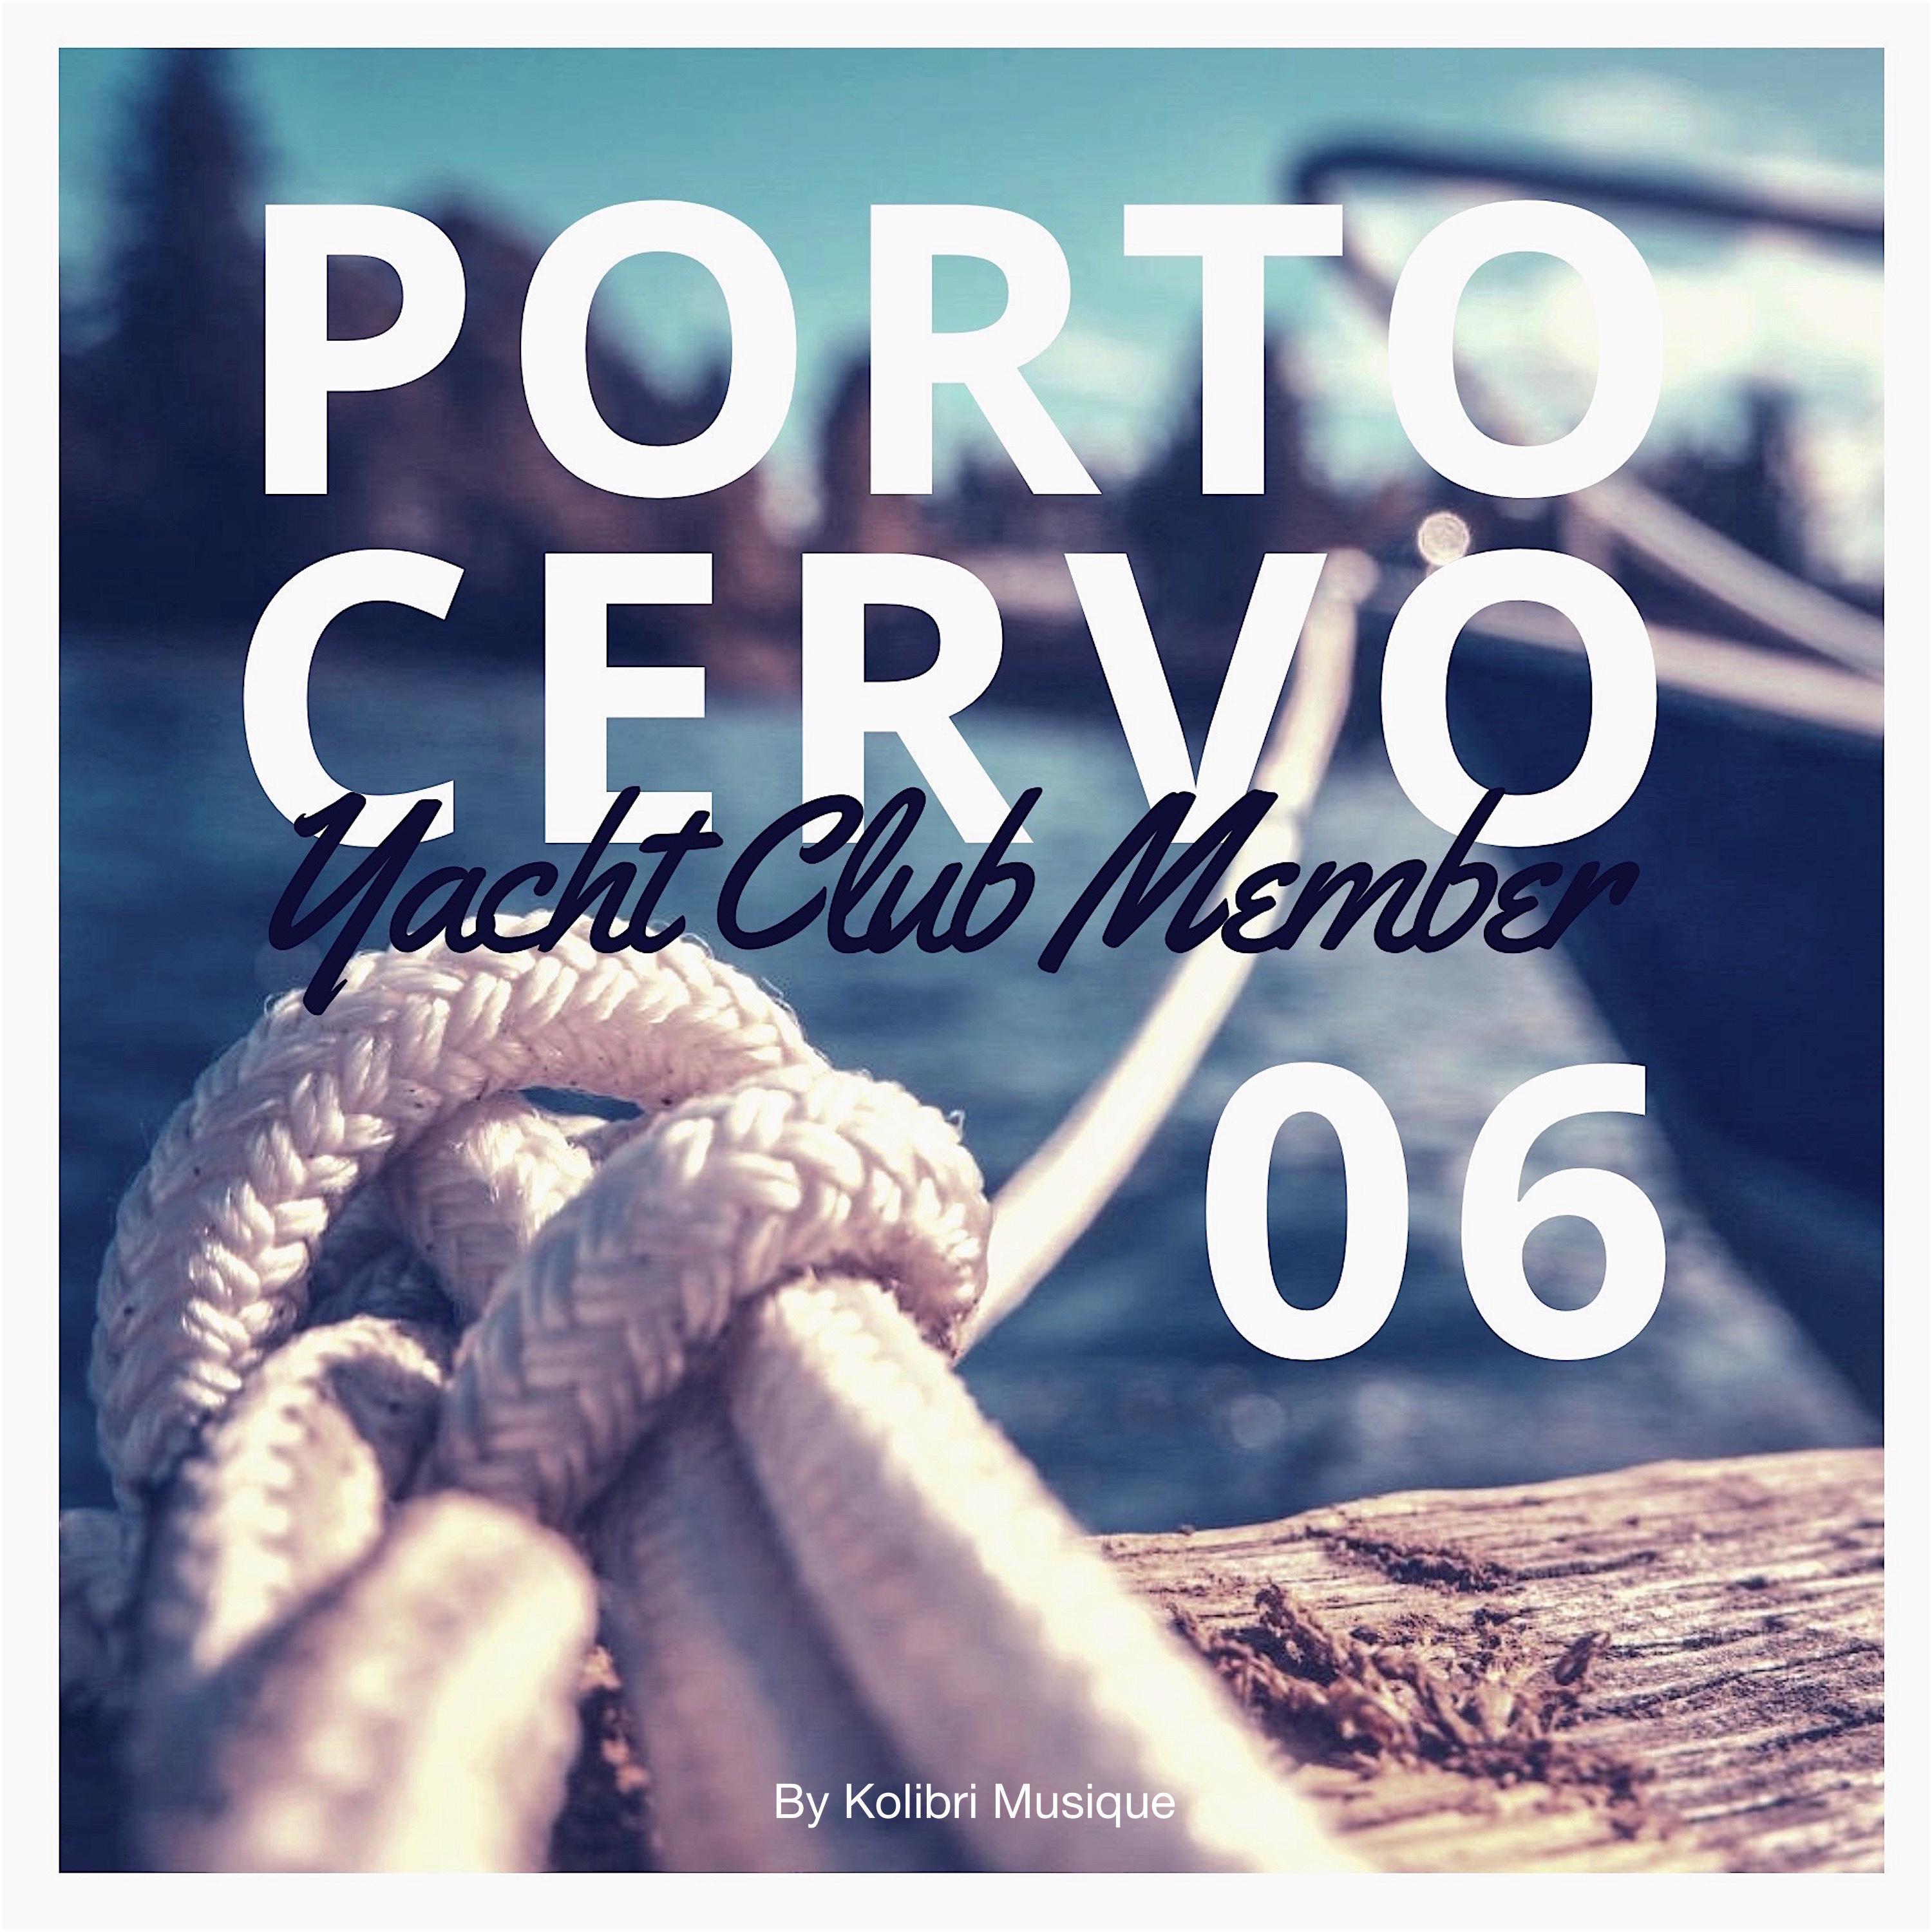 Porto Cervo 06 Yacht Club Member - Presented by Kolibri Musique